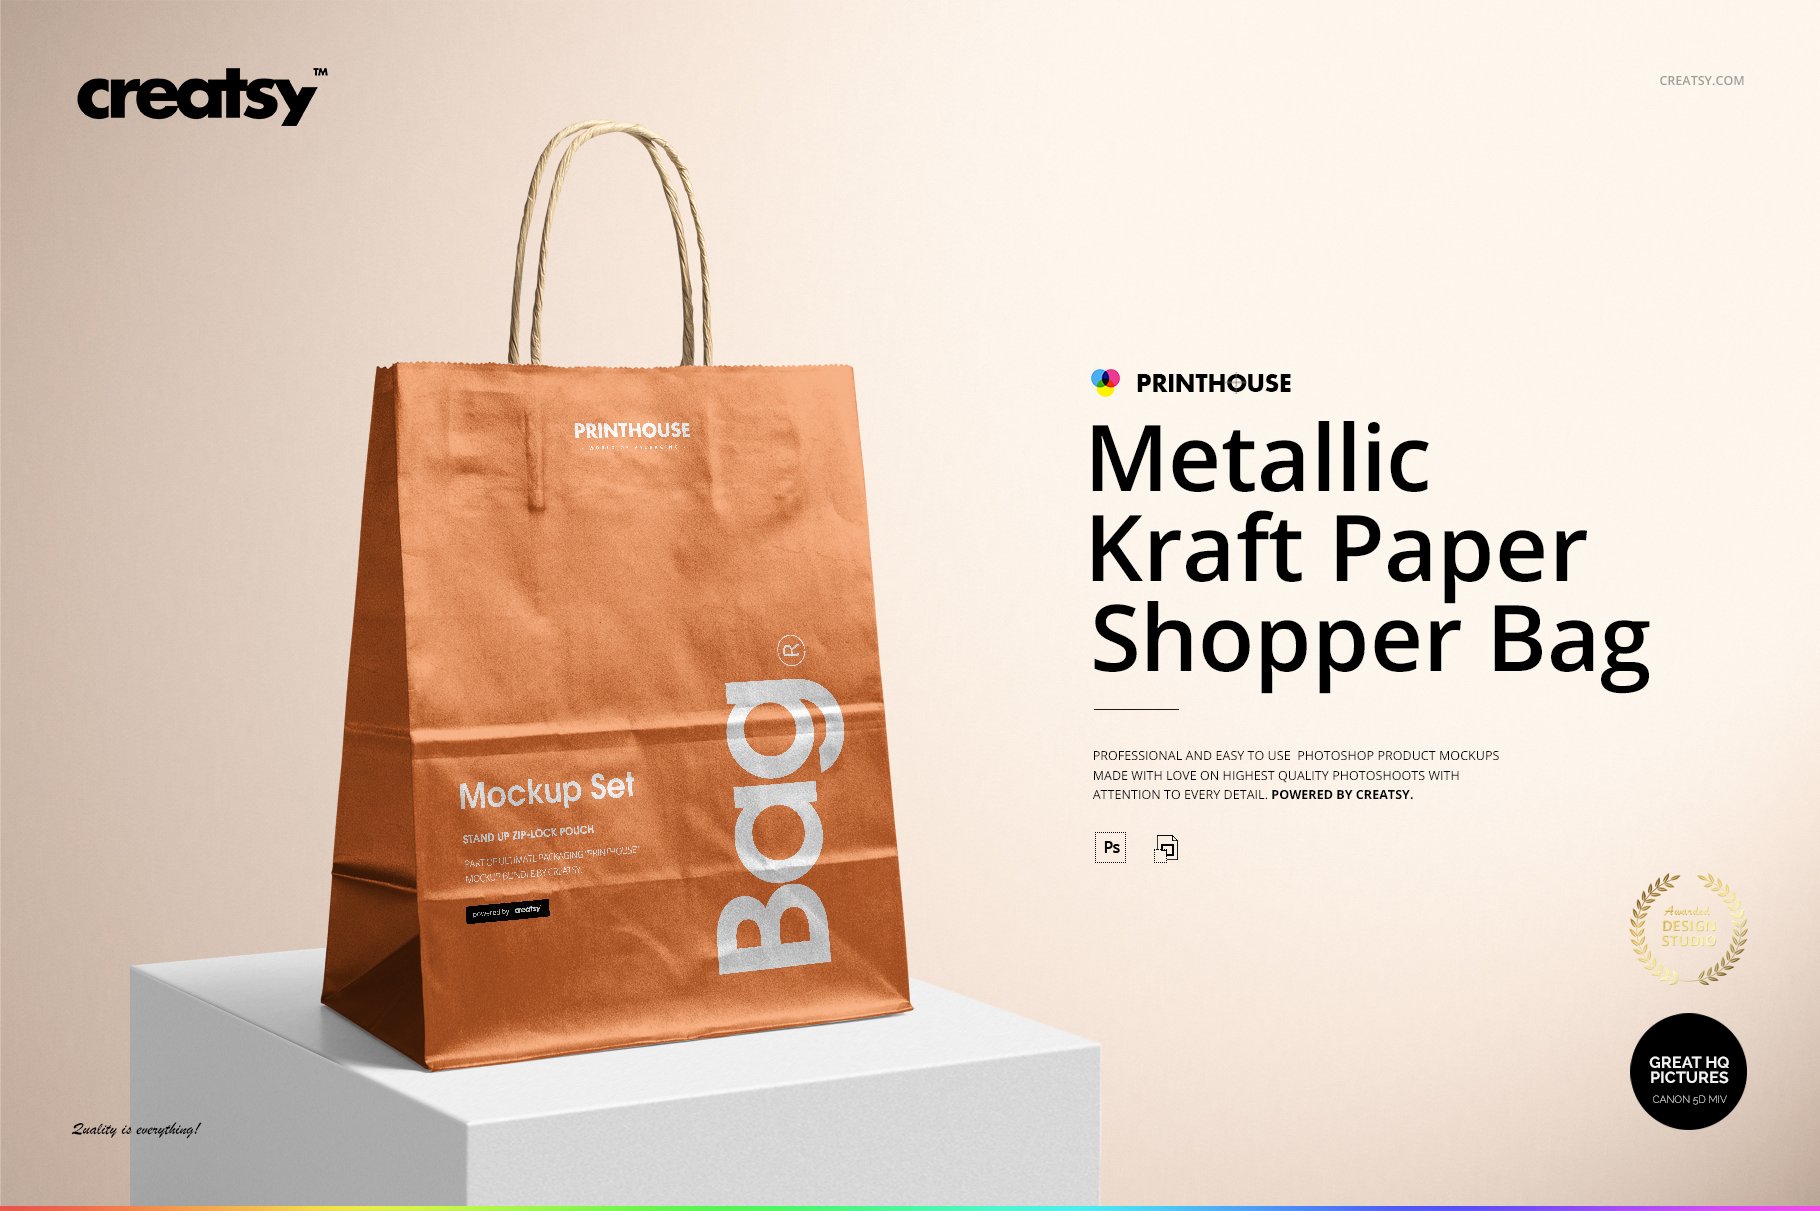 Metallic Kraft Paper Bag Mockup Set cover image.